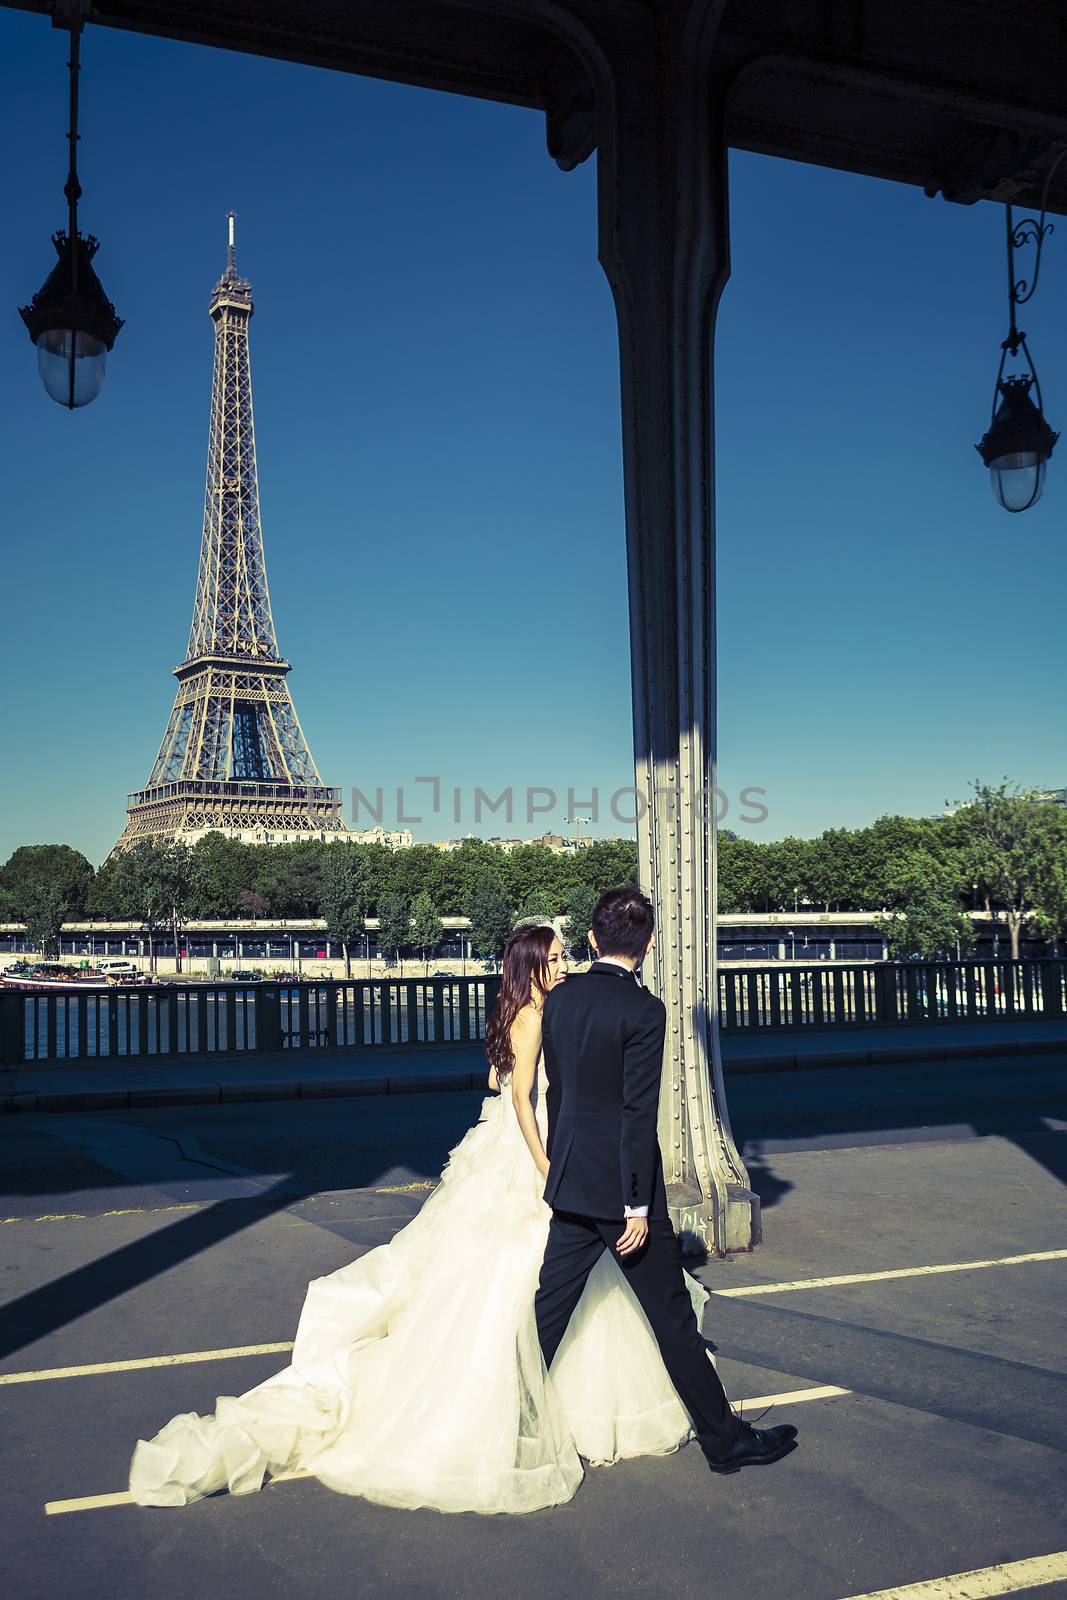 Married on a bridge in Paris by vwalakte